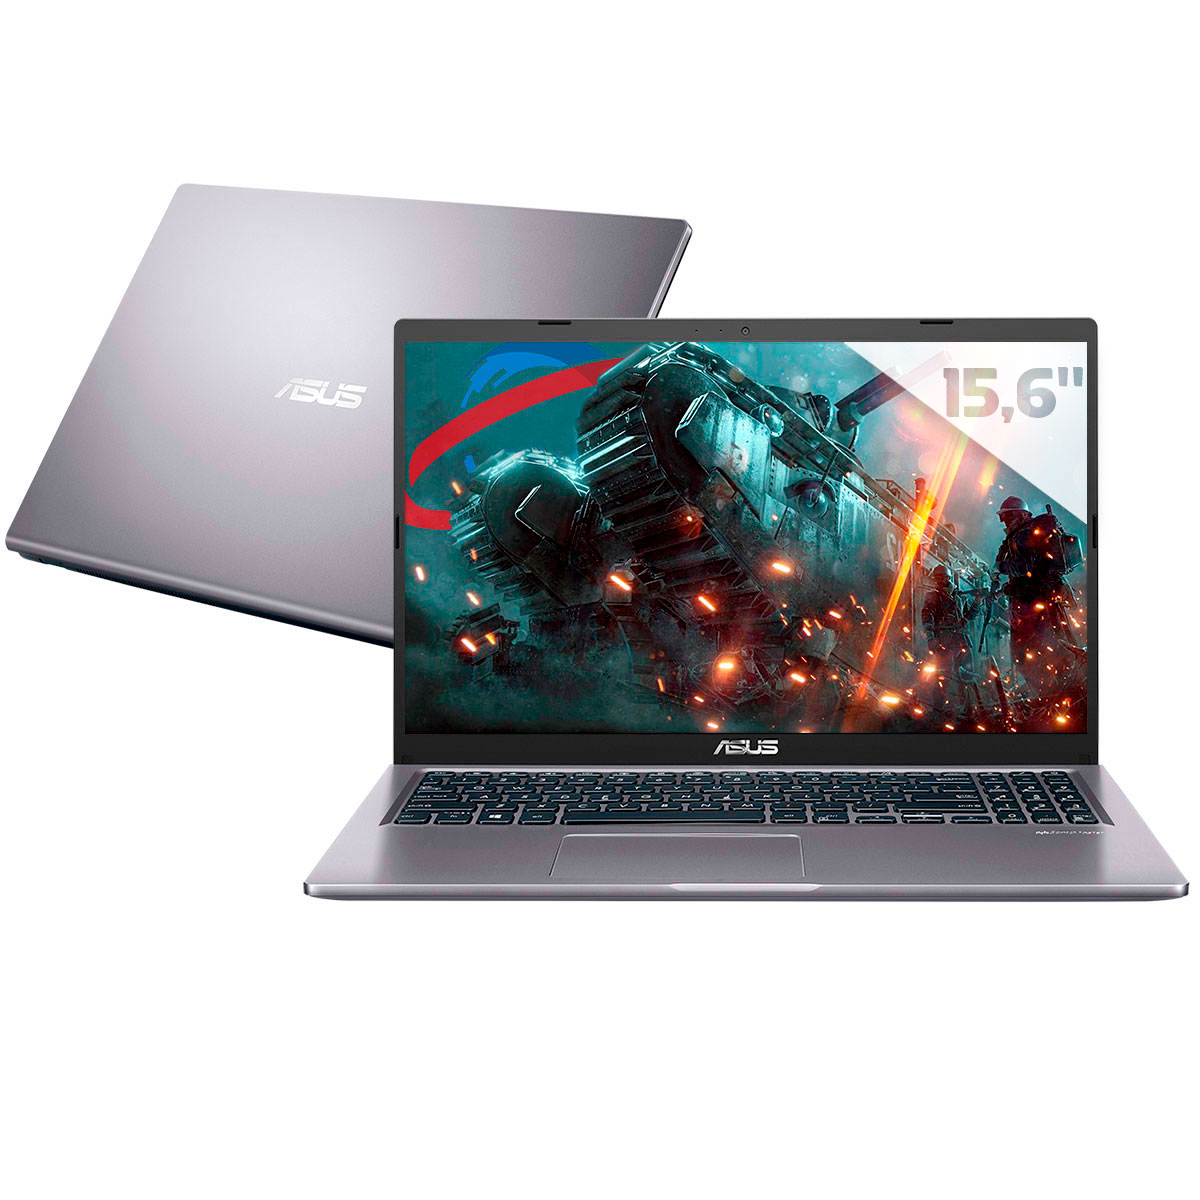 Notebook Asus M515DA-EJ502T - Ryzen 5, RAM 8GB, SSD 256GB, Radeon Vega 8, Tela 15.6